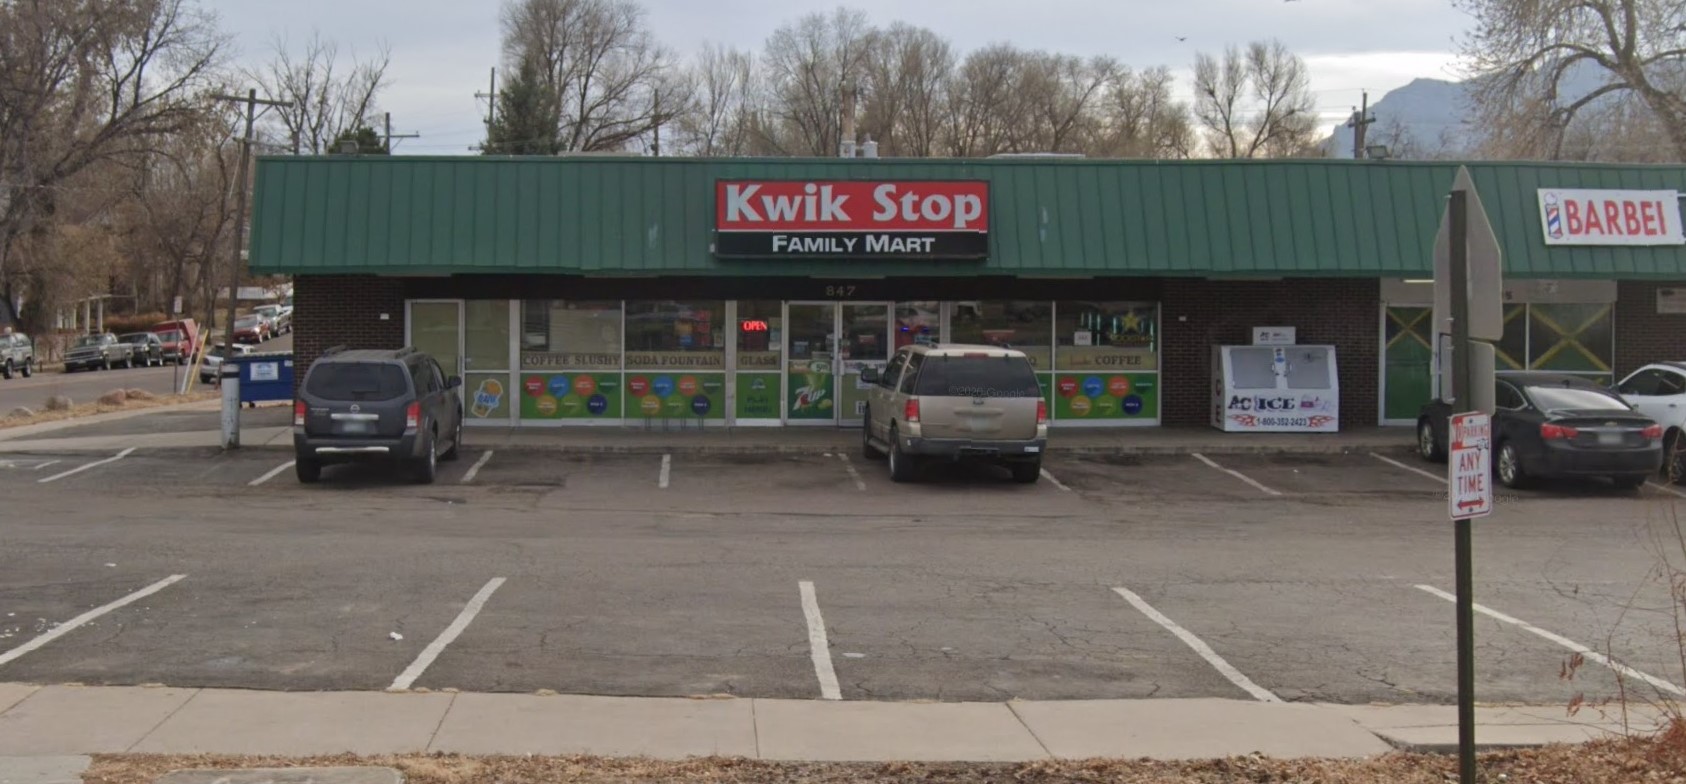 Kwik Stop Family Mart